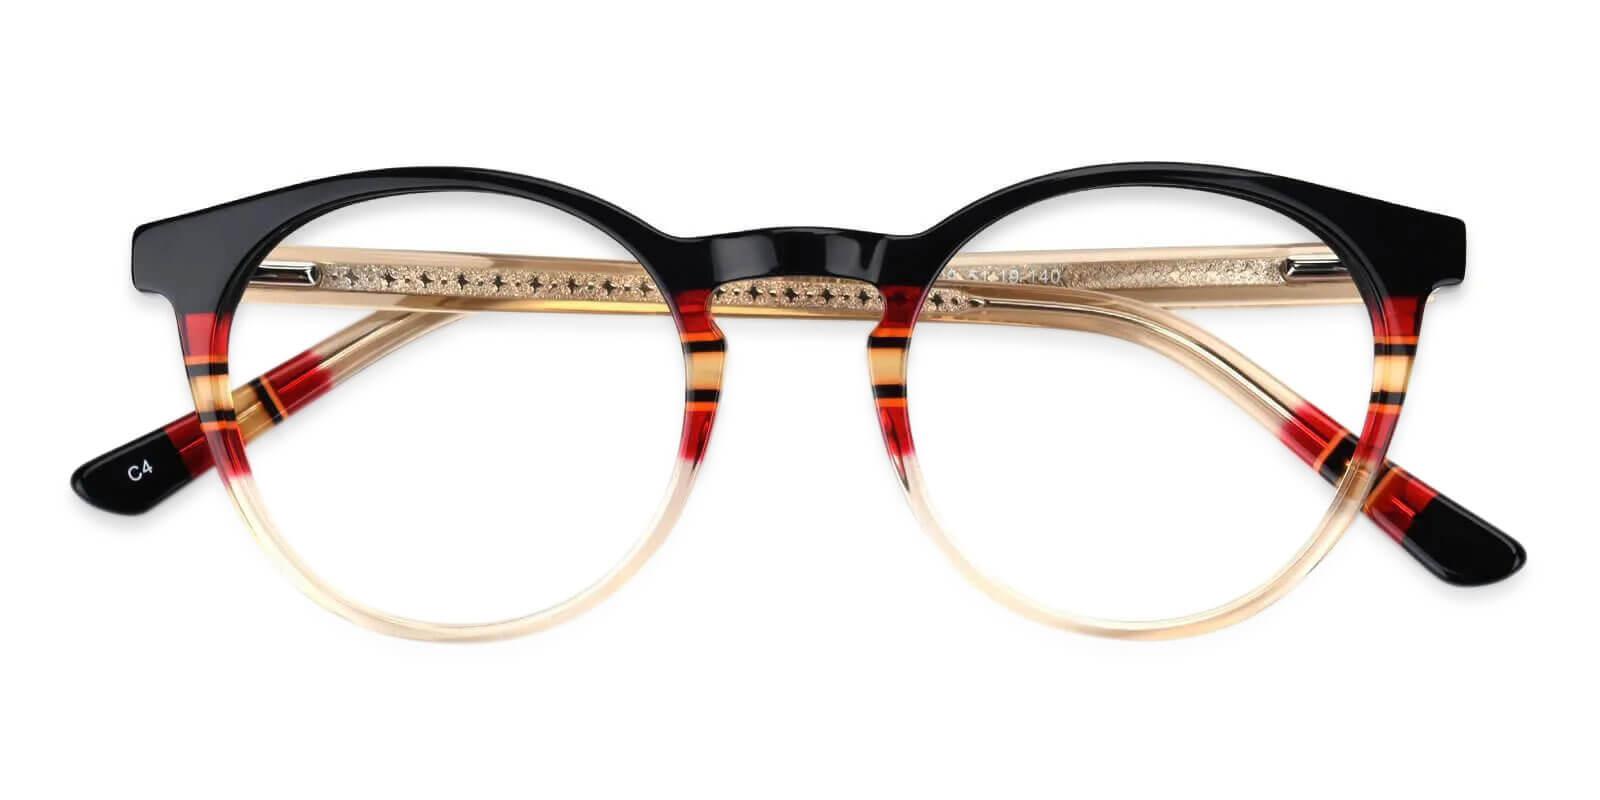 Berounka Pattern Acetate Eyeglasses , UniversalBridgeFit Frames from ABBE Glasses